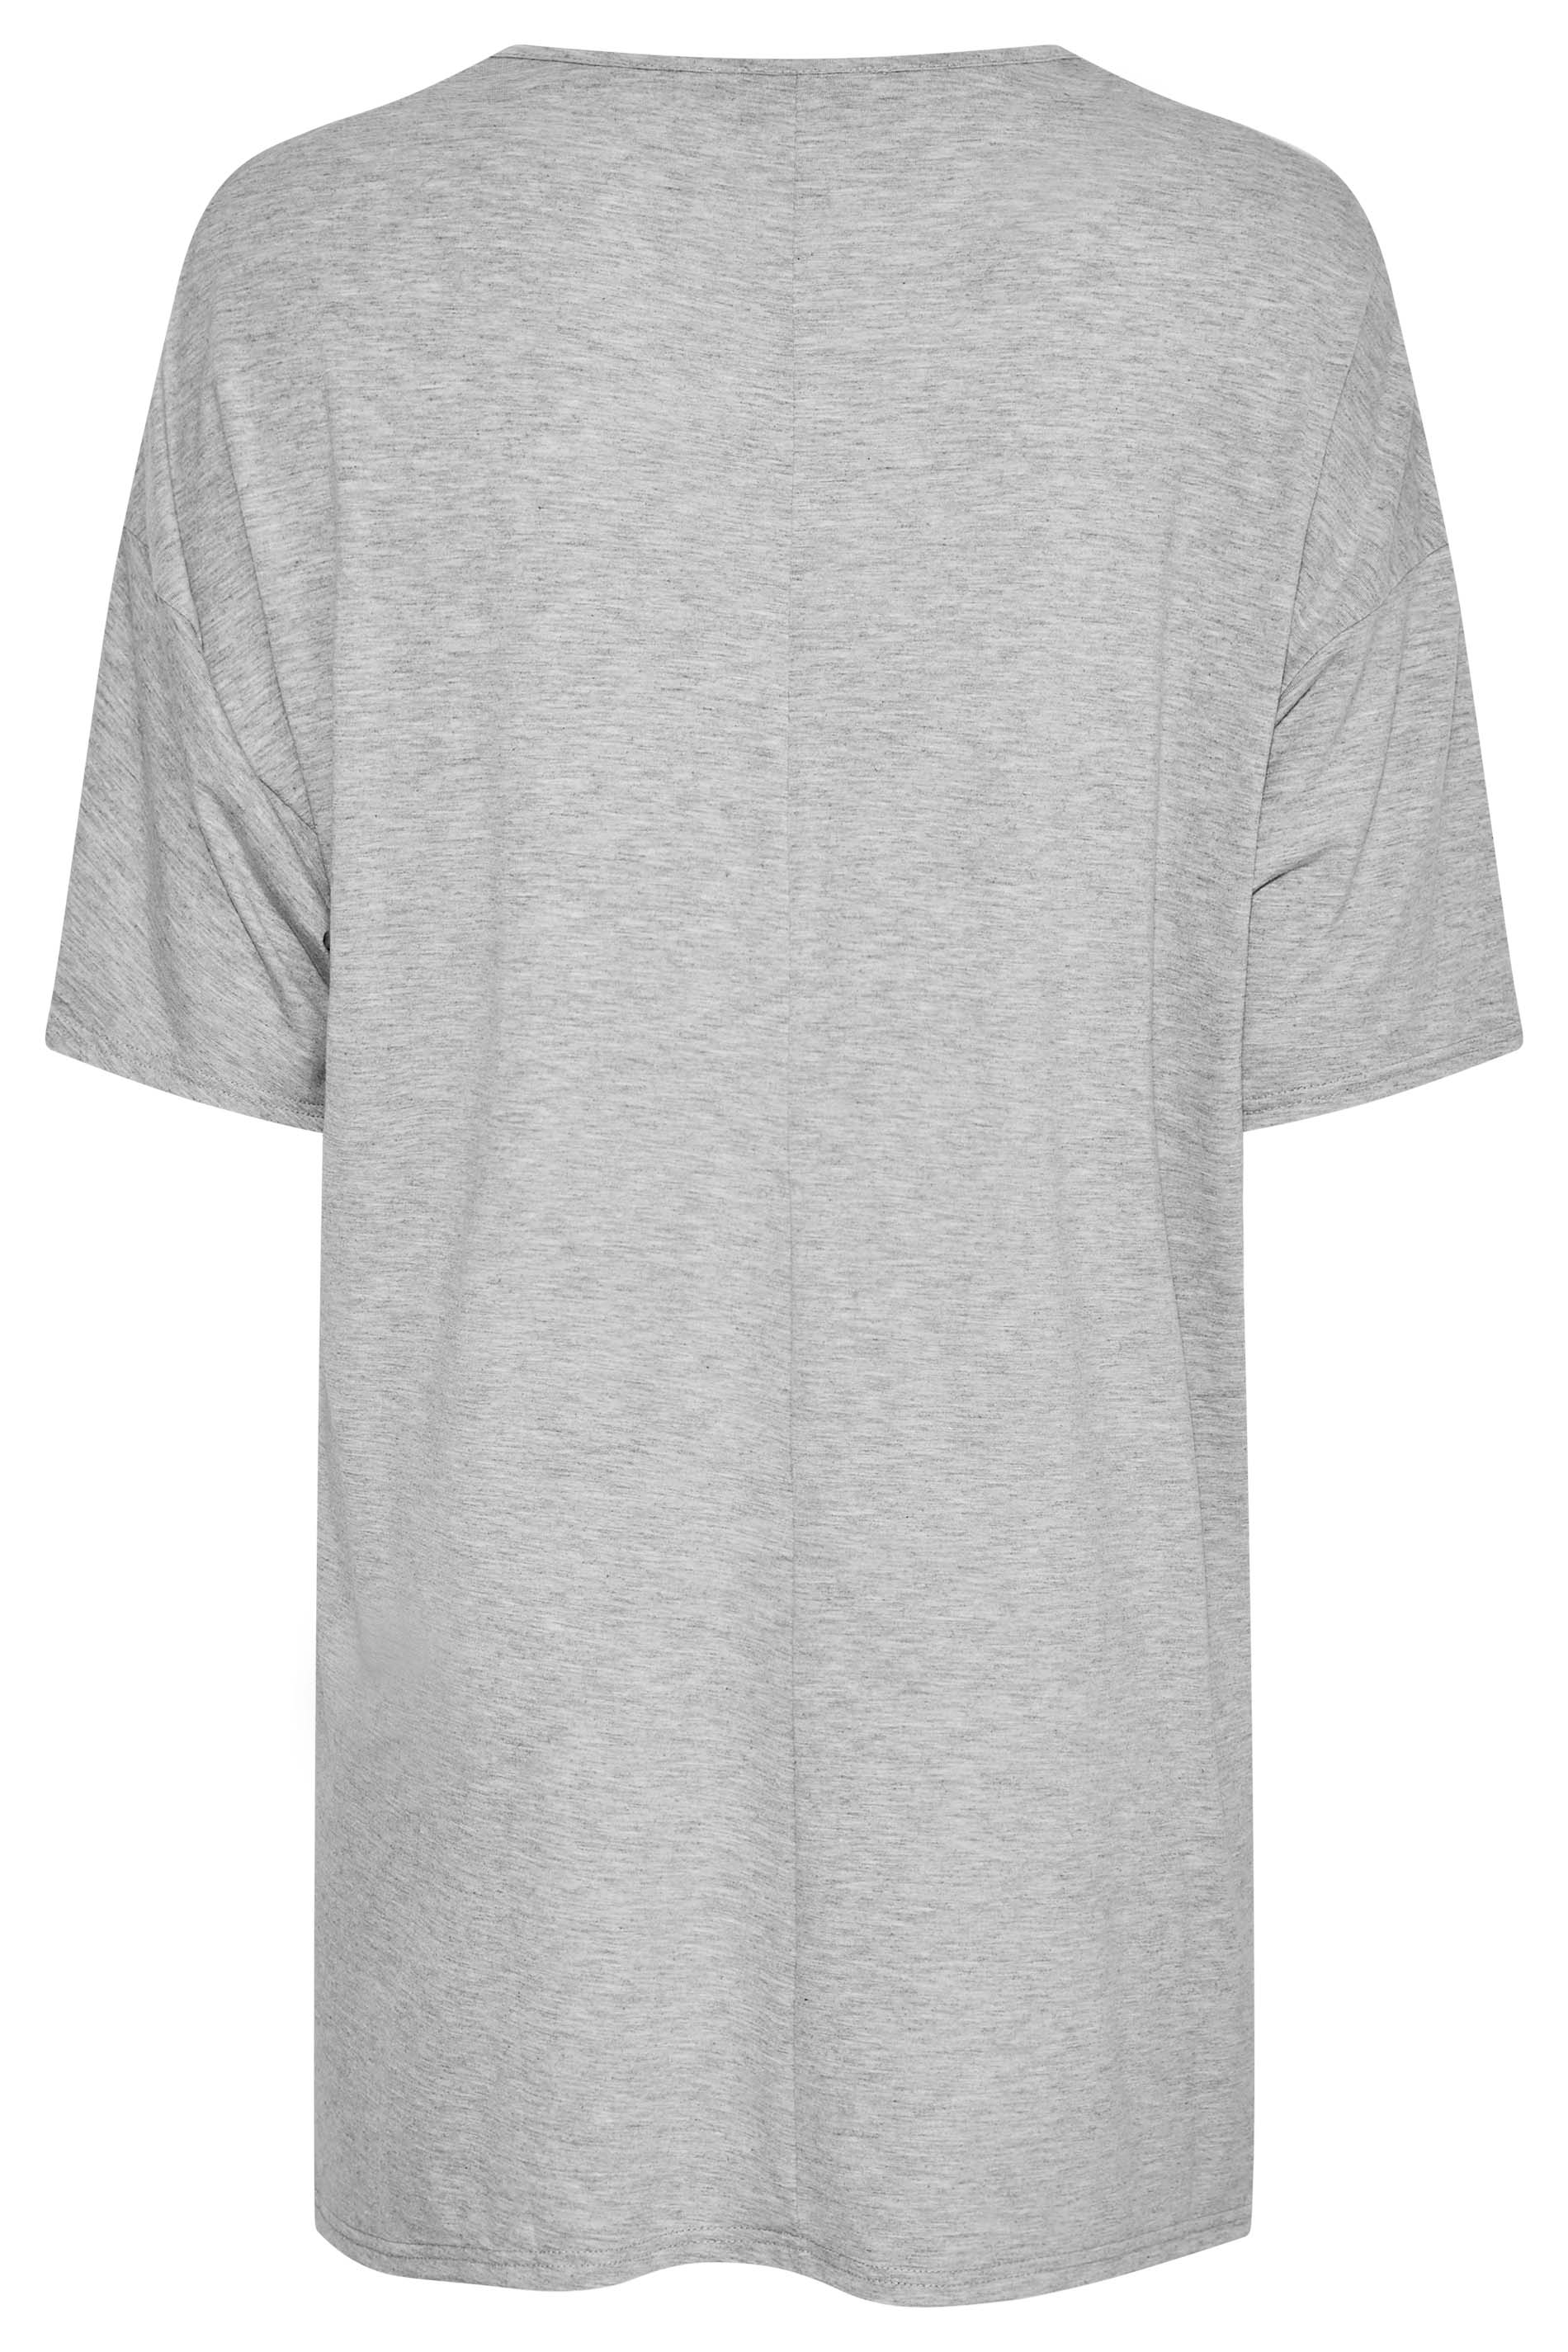 Grande taille  Tops Grande taille  T-Shirts | LIMITED COLLECTION - T-Shirt Gris Léopard Argenté - RT22526